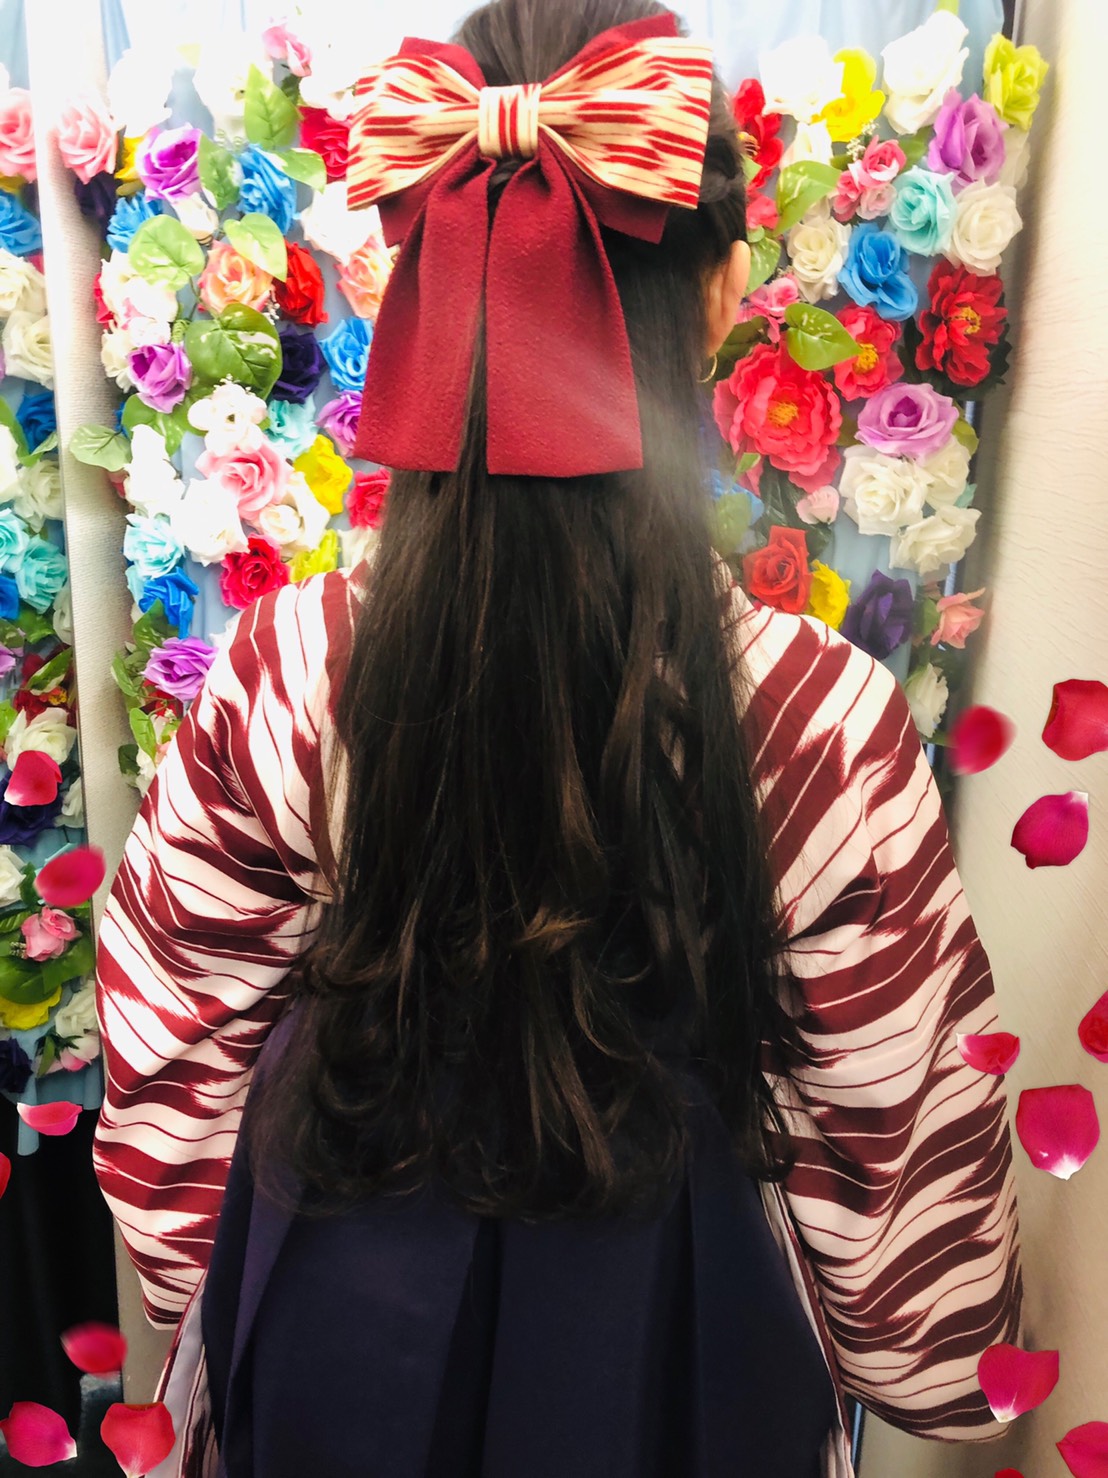 Shop Topics はいからさんスタイル 着物レンタルvasara渋谷店 渋谷で着物 浴衣を楽しむなら 着物レンタルvasara